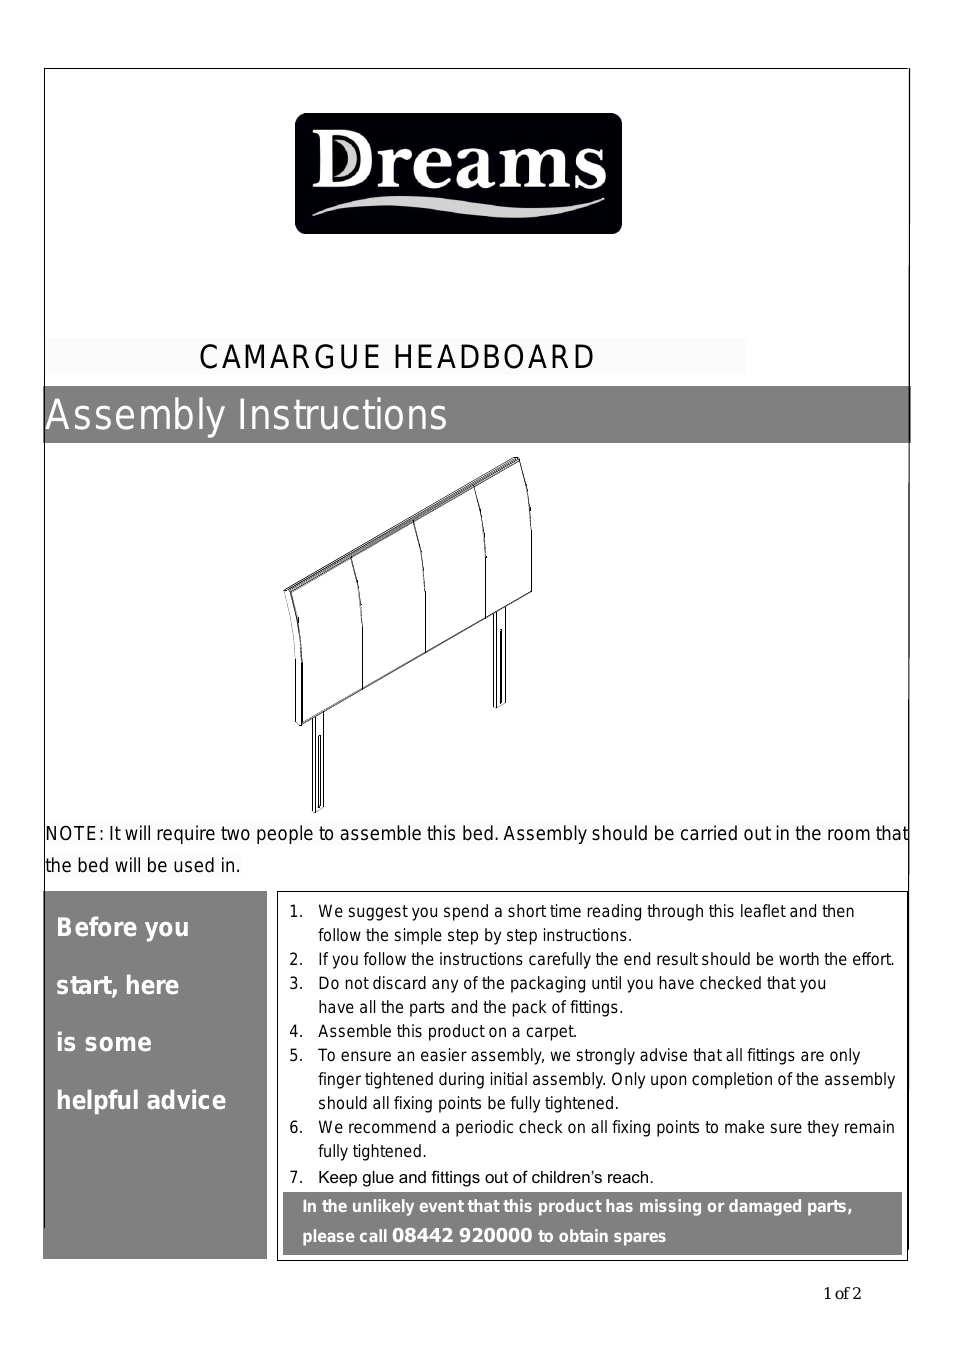 Camargue Headboard